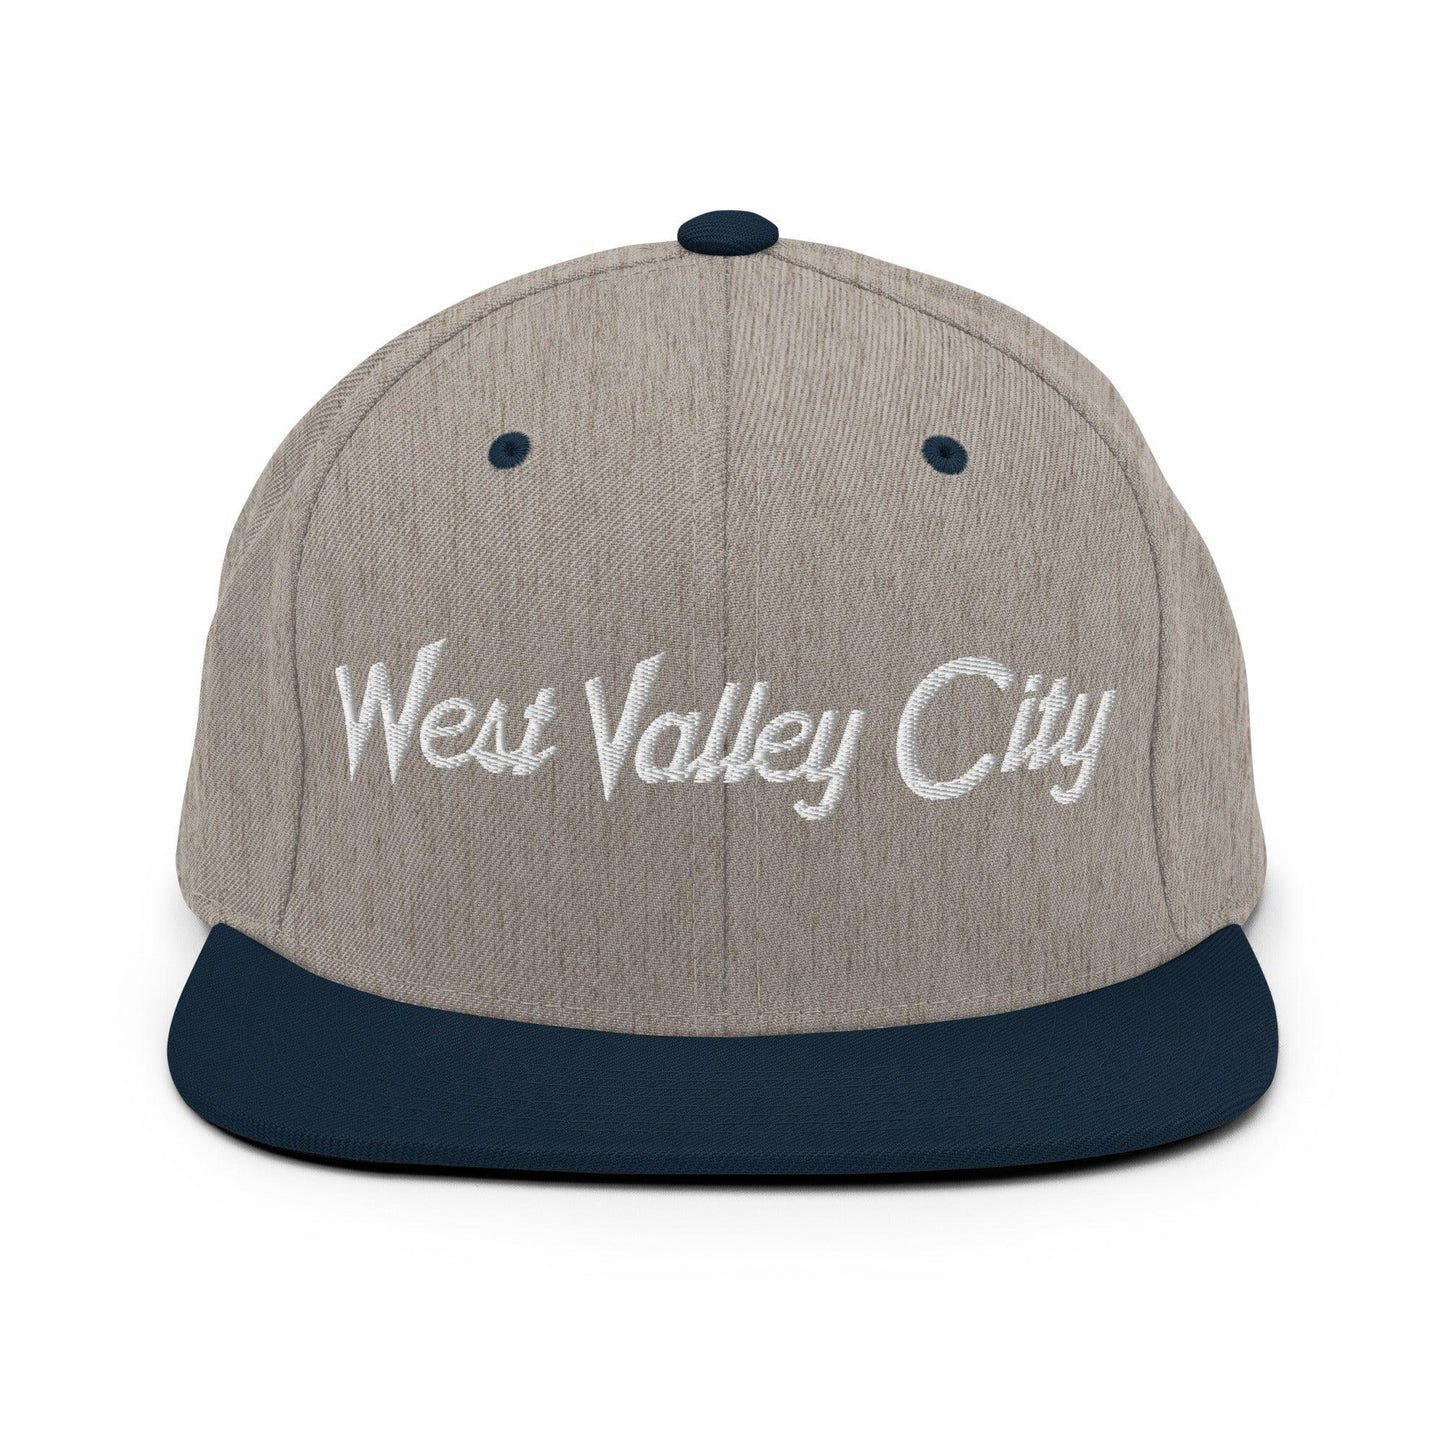 West Valley City Script Snapback Hat Heather Grey Navy